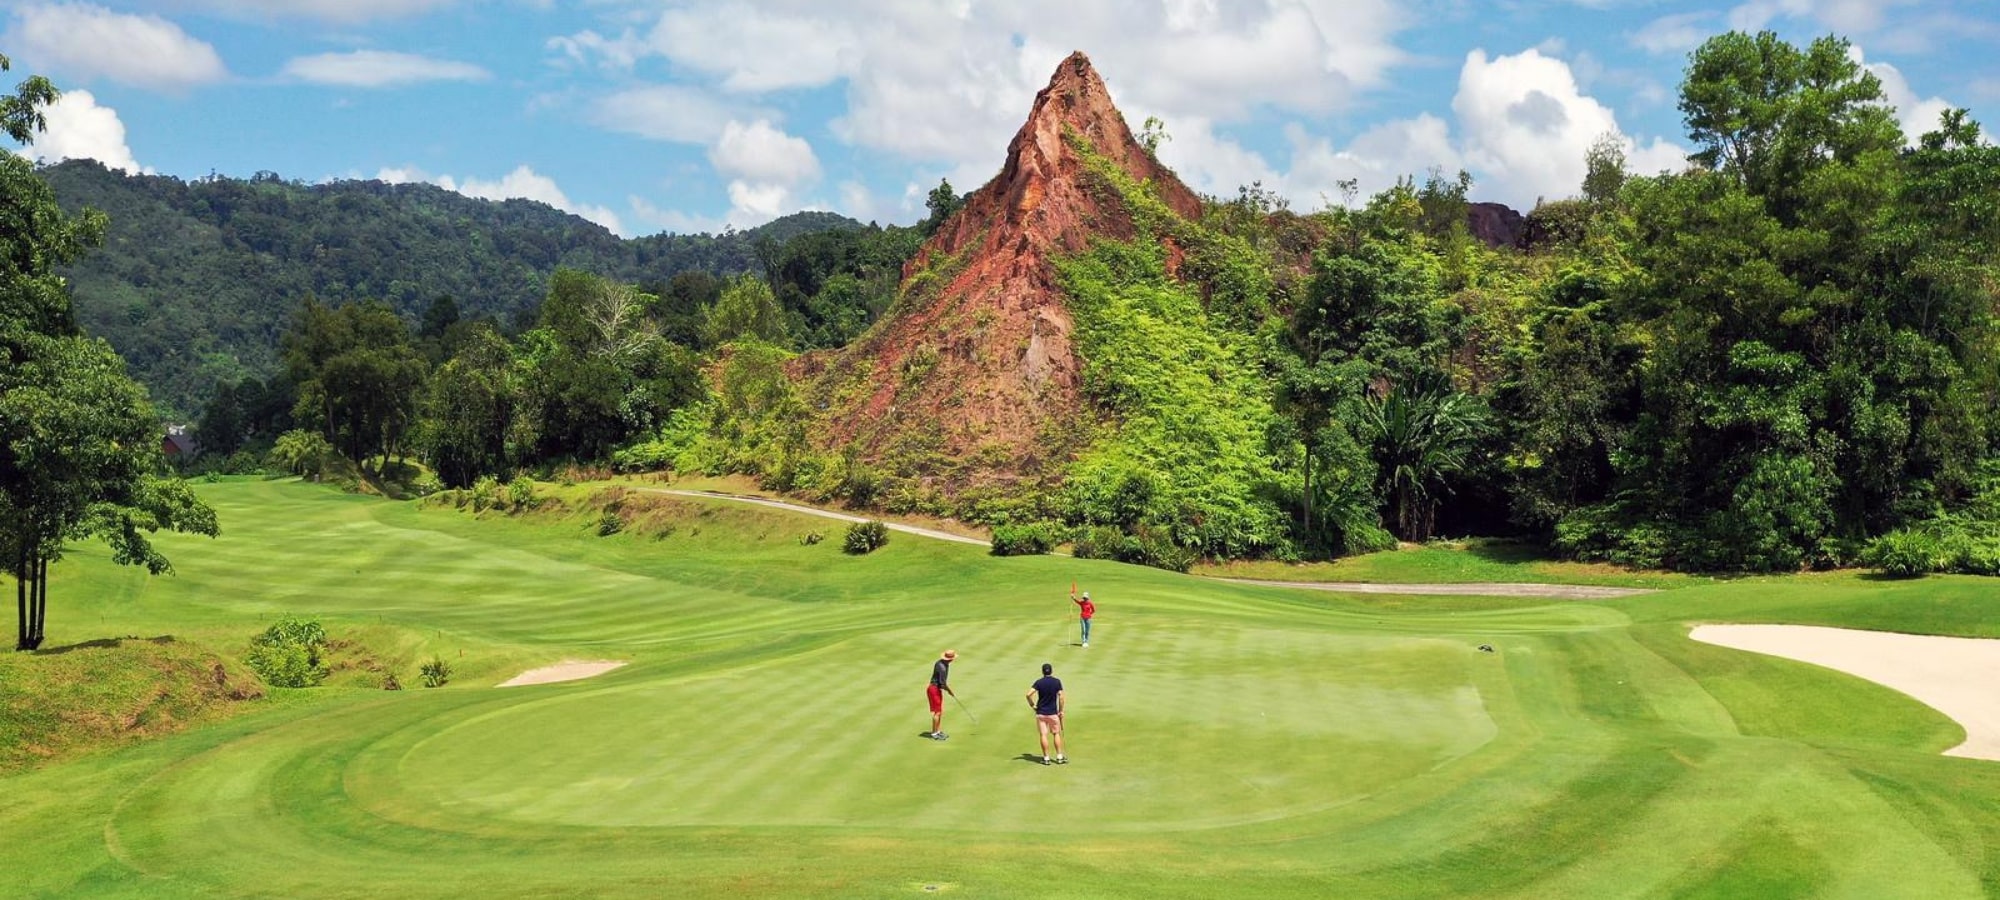 Top 10 Golf Courses in Thailand ValentinakruwDuncan